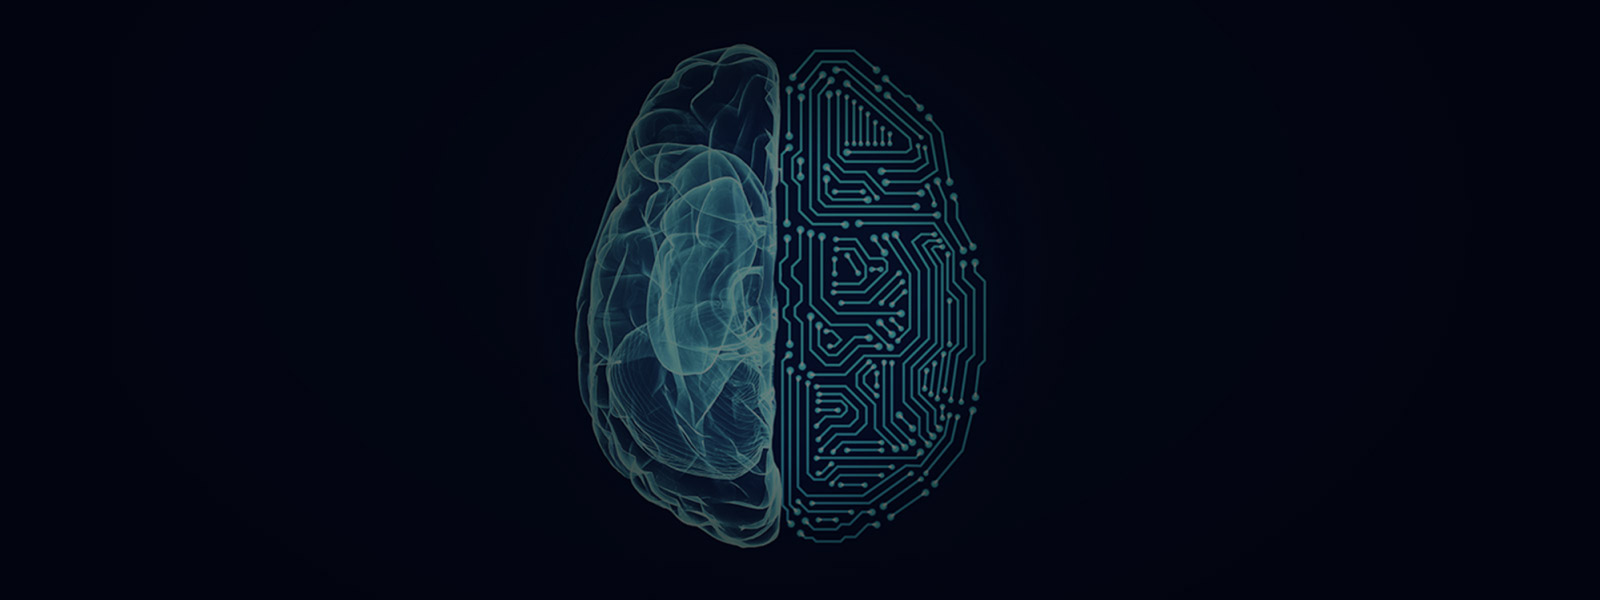 Tech brain